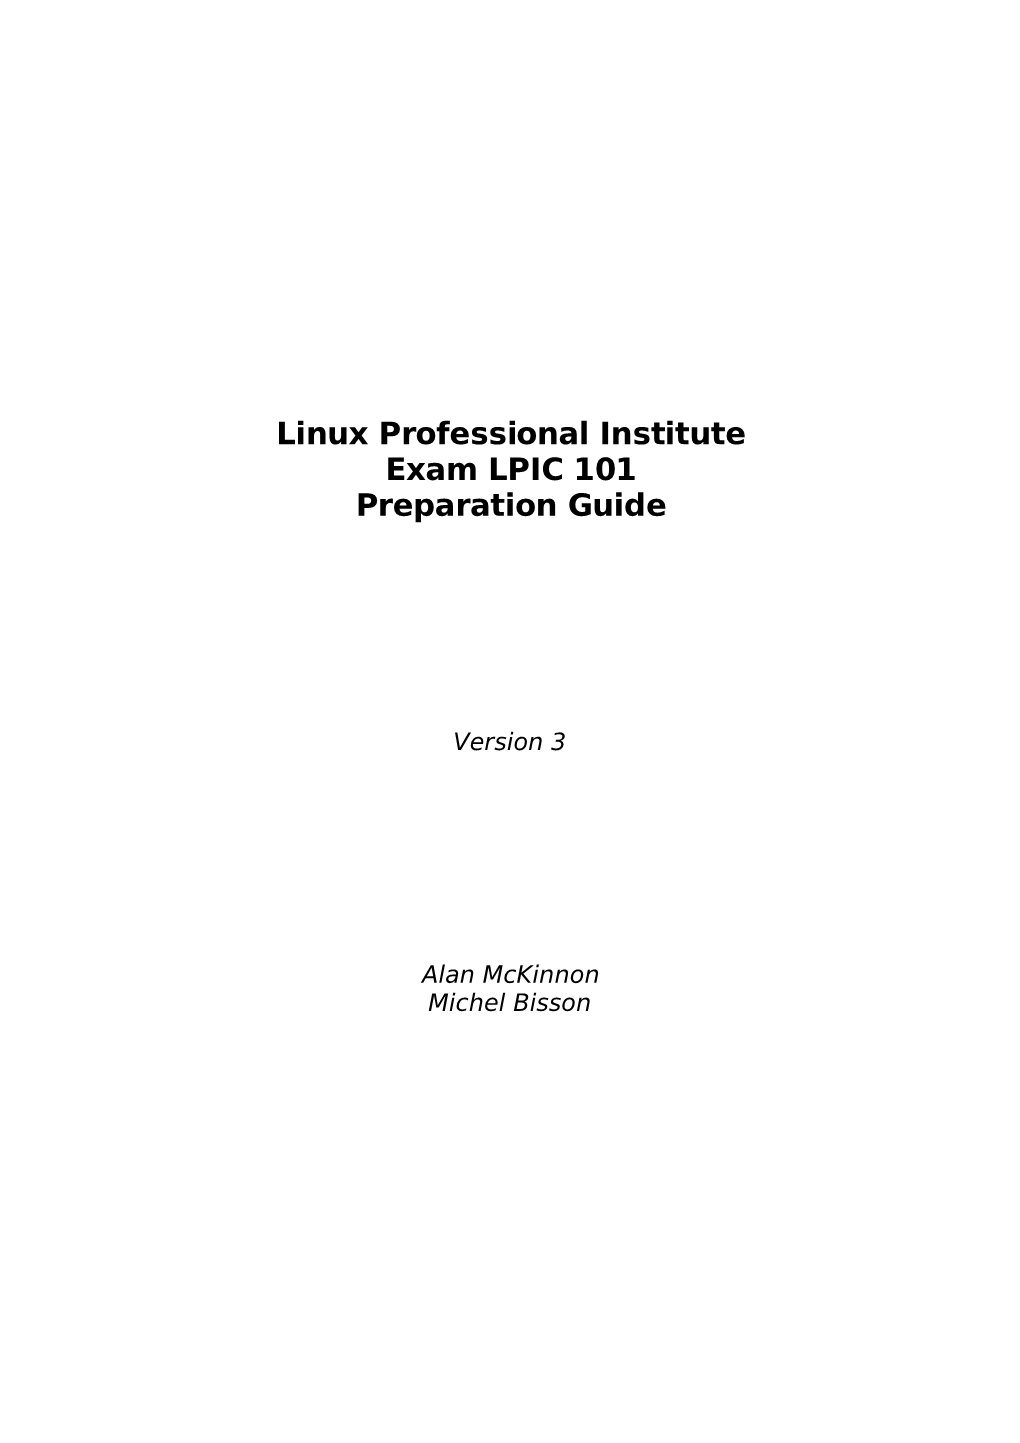 LPIC 101 Preparation Guide